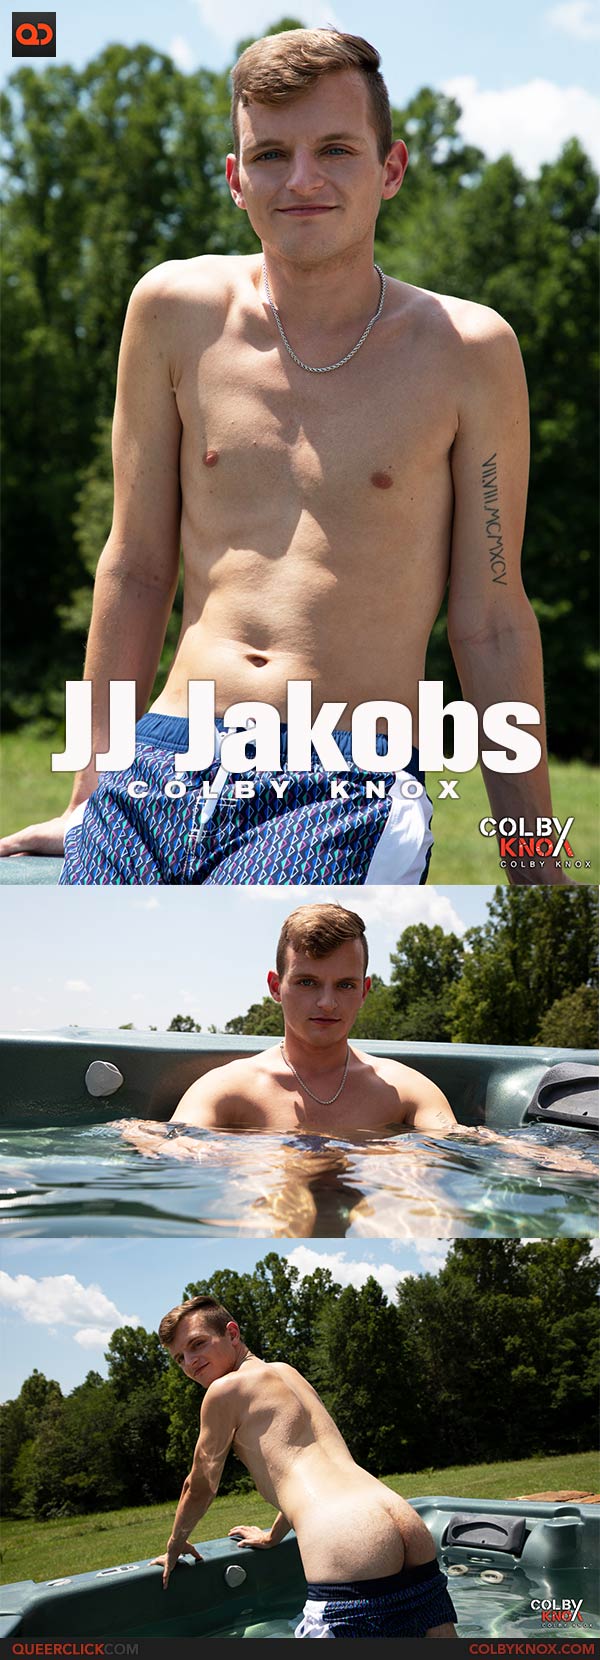 Colby Knox: Meet JJ Jakobs